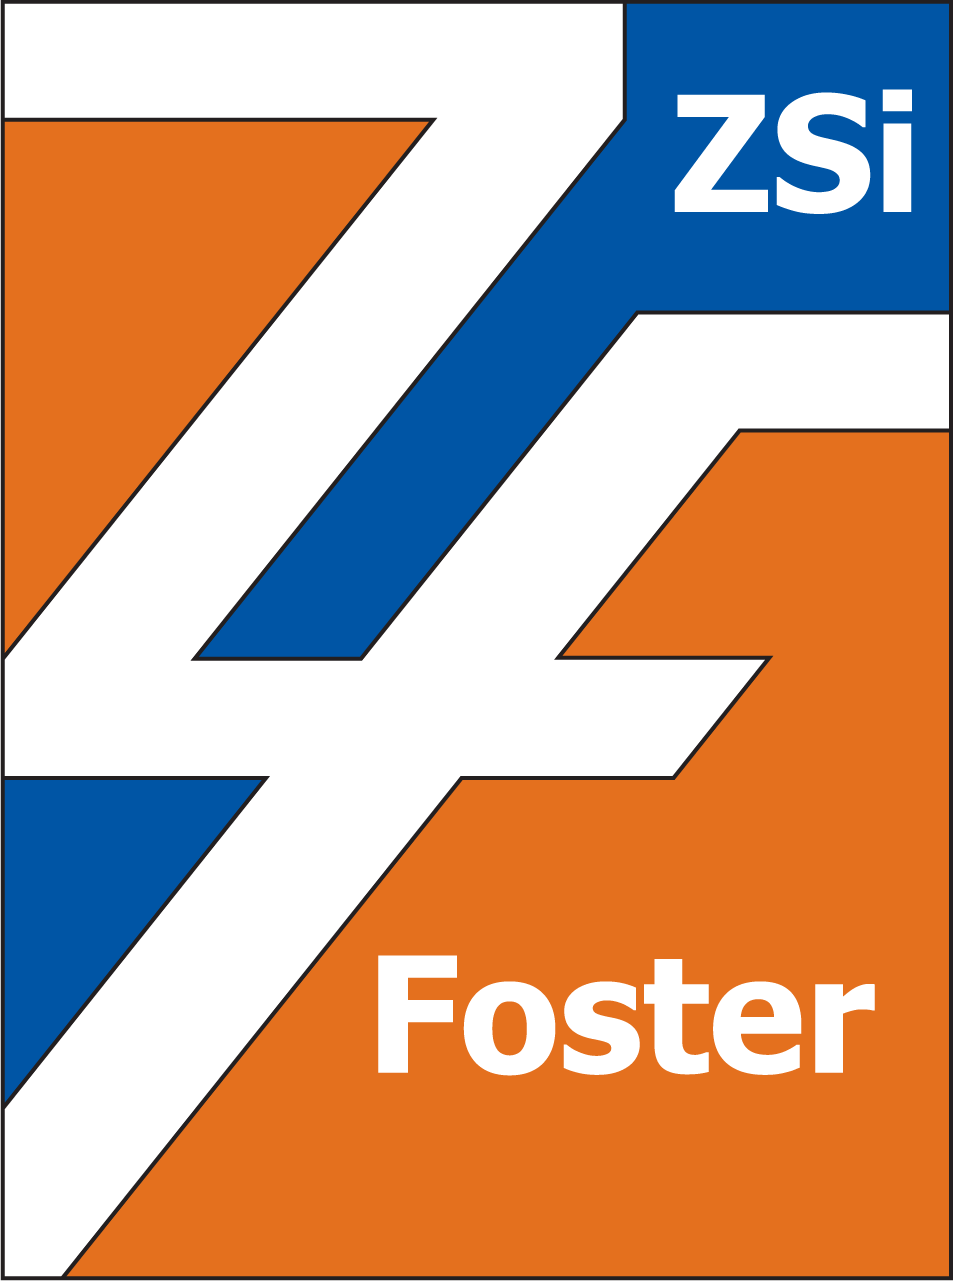 The Foster logo (orange, blue, and white)